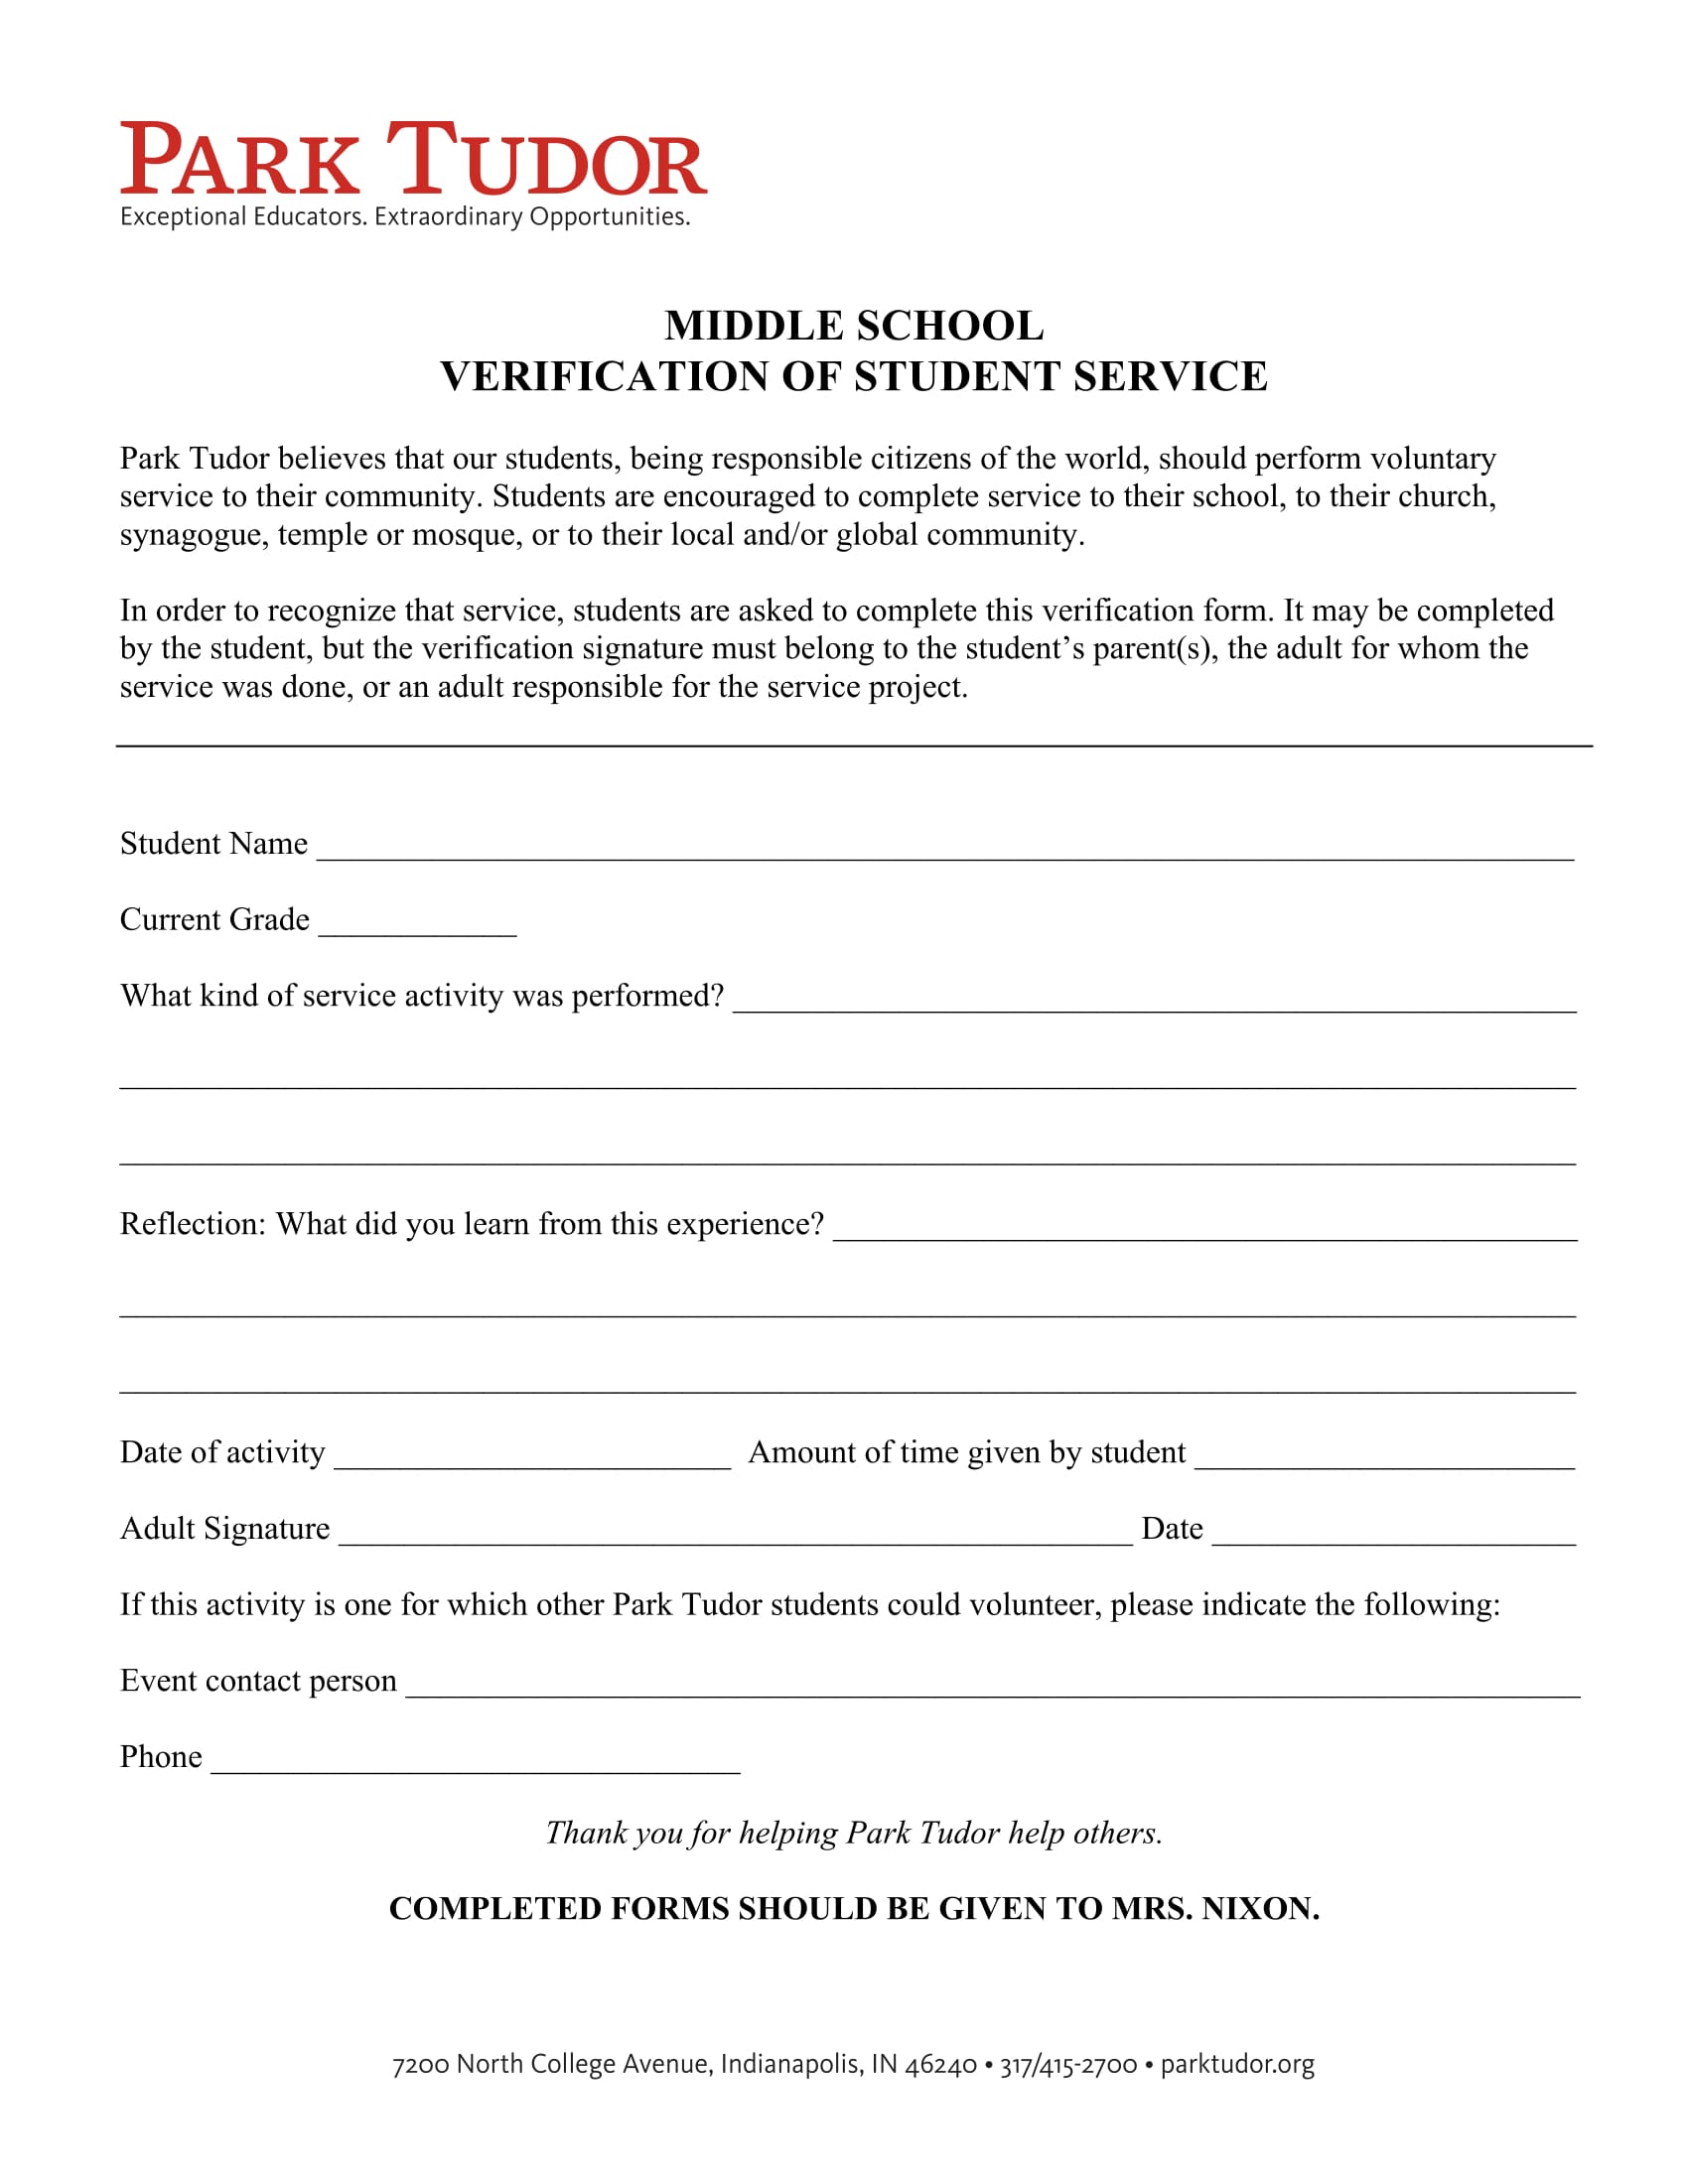 student service verification form 1